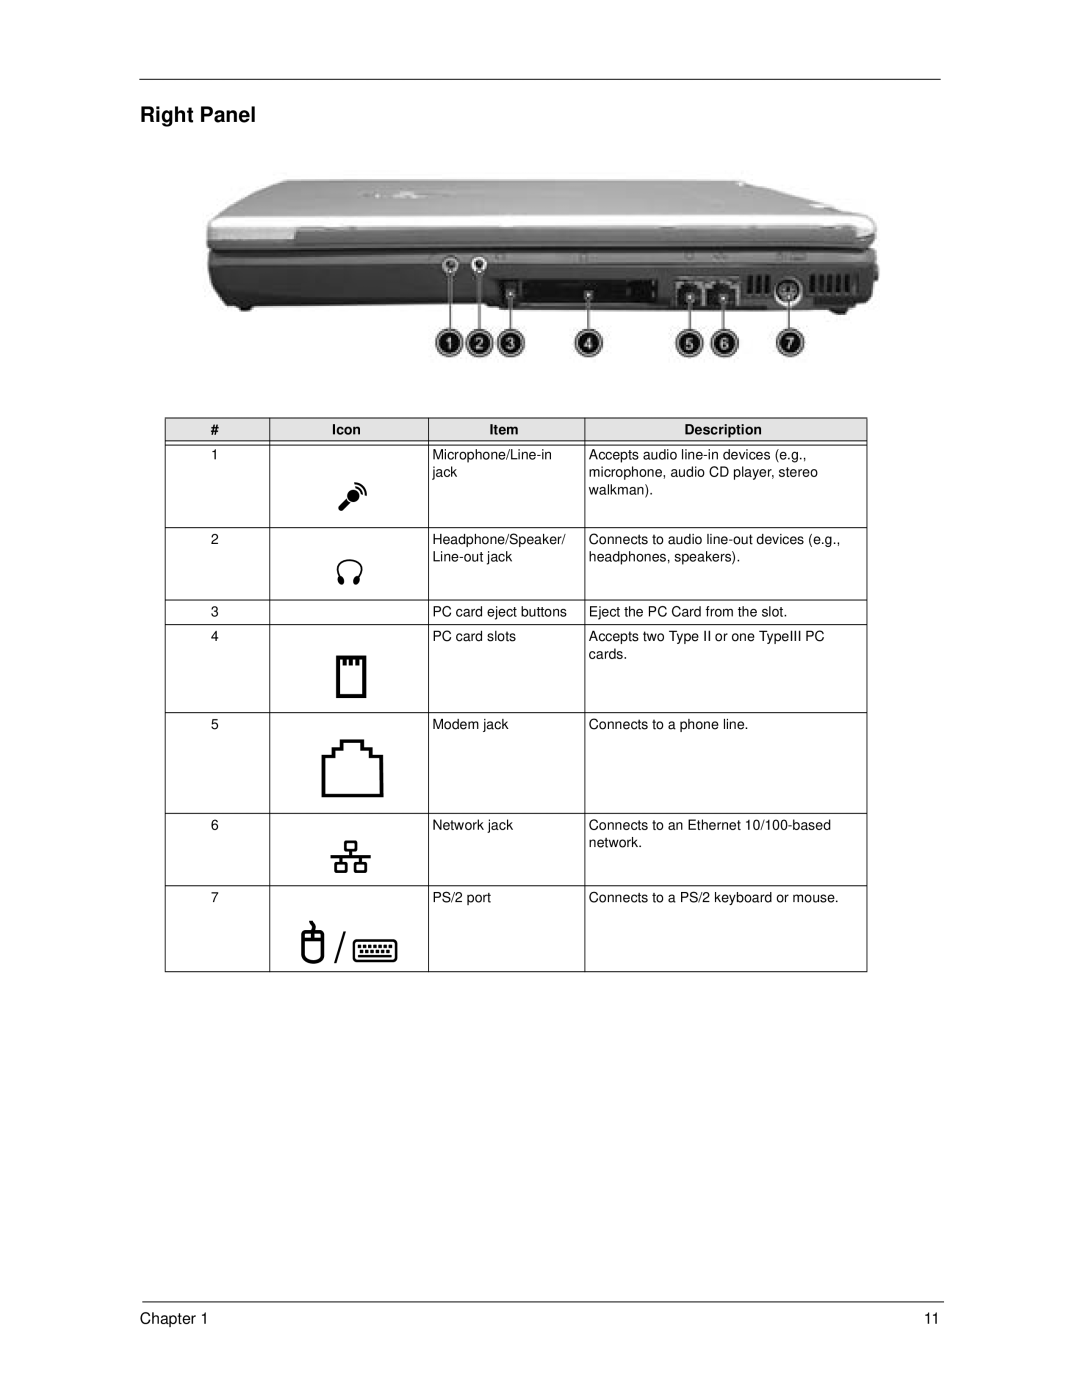 Acer 270 manual Right Panel, Icon, Description 